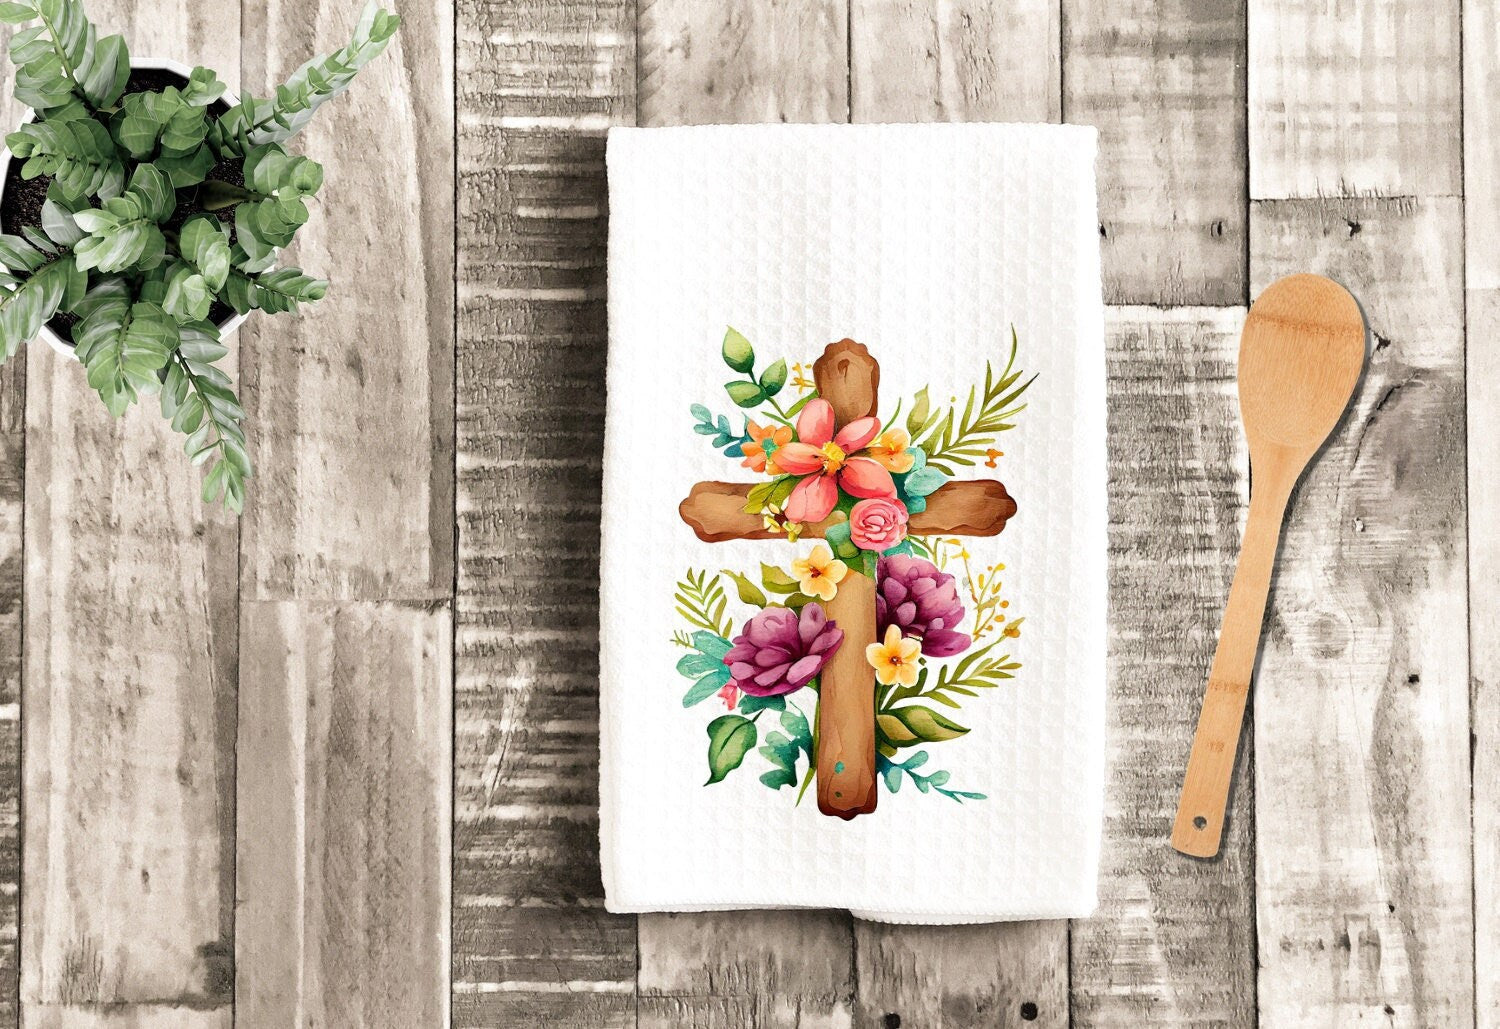 Floral Cross Dish Towel - Spring Flowers Christian Tea Towel Kitchen - New Home Gift, Housewarming Farm Decorations house Decor Towel